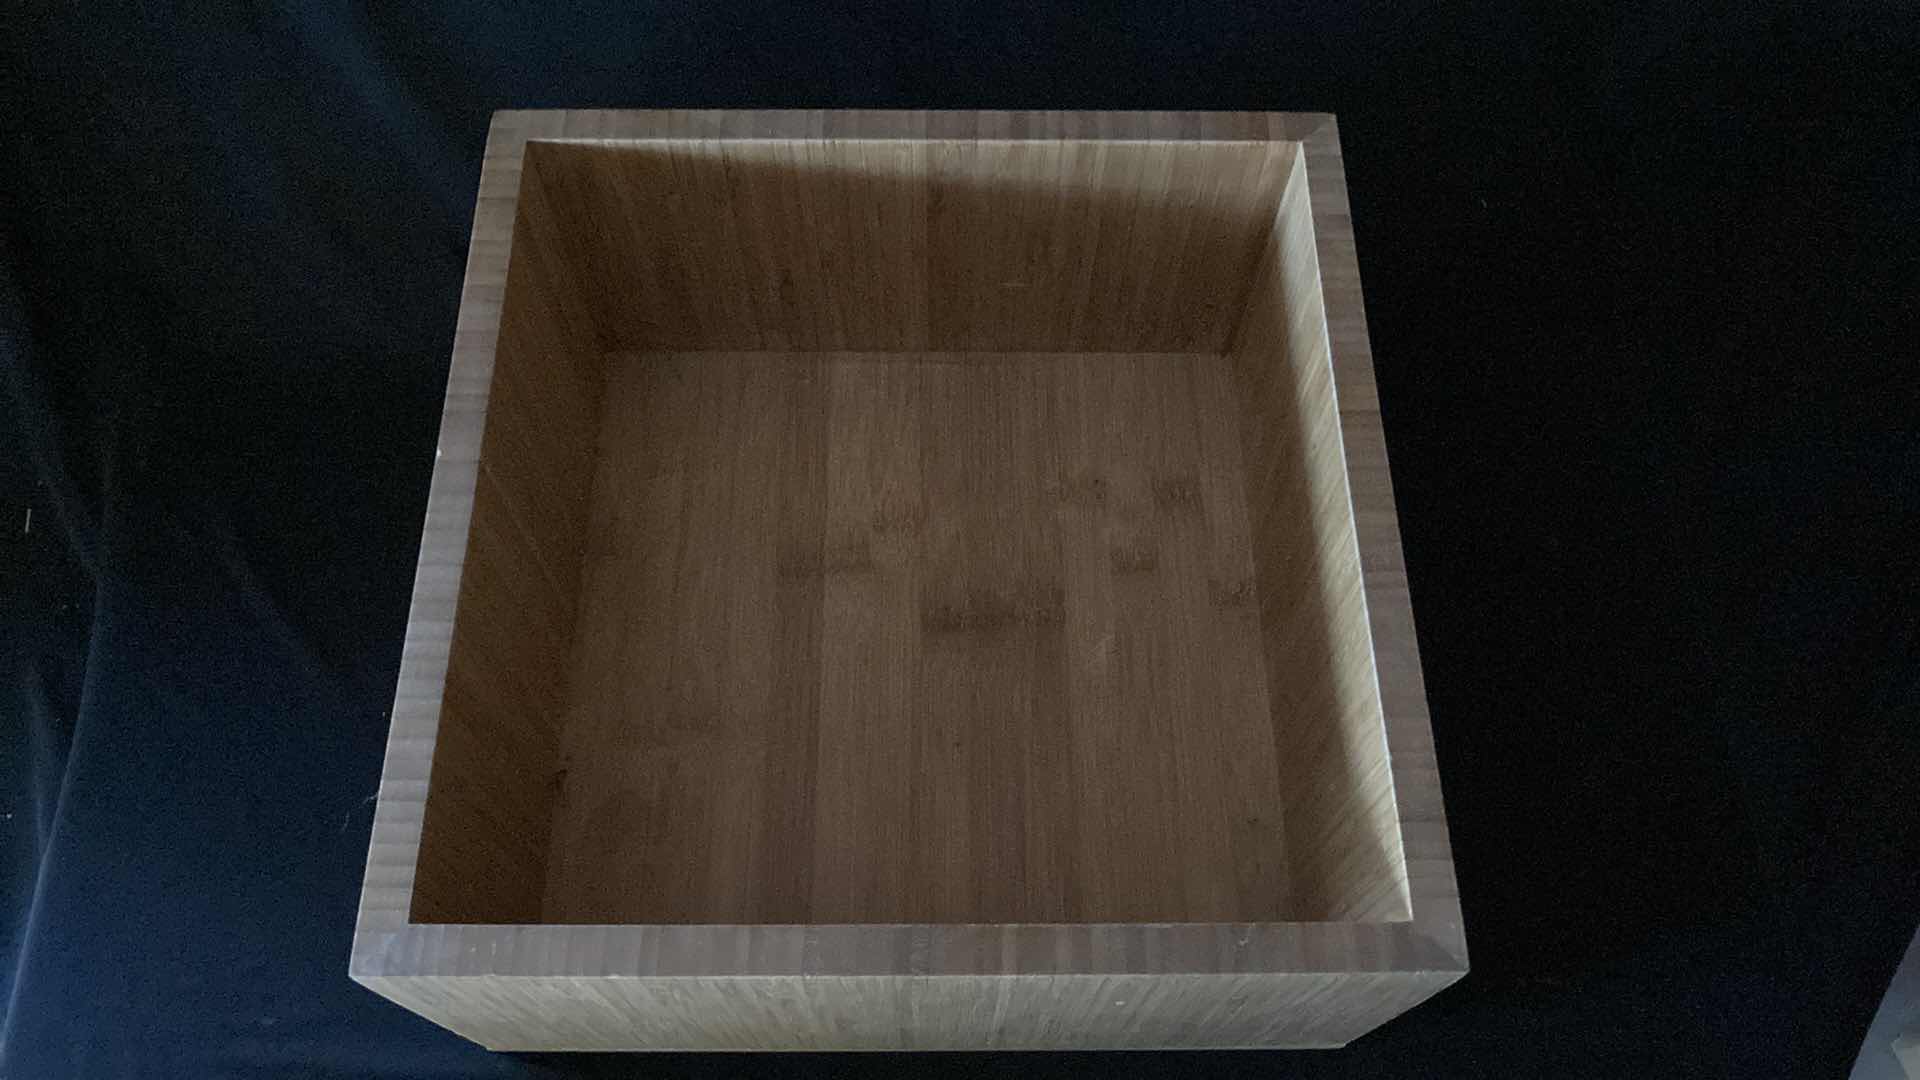 Photo 4 of EDGE GRAIN WOOD PLANTER BOX 12.75” X 12.75” H 6”